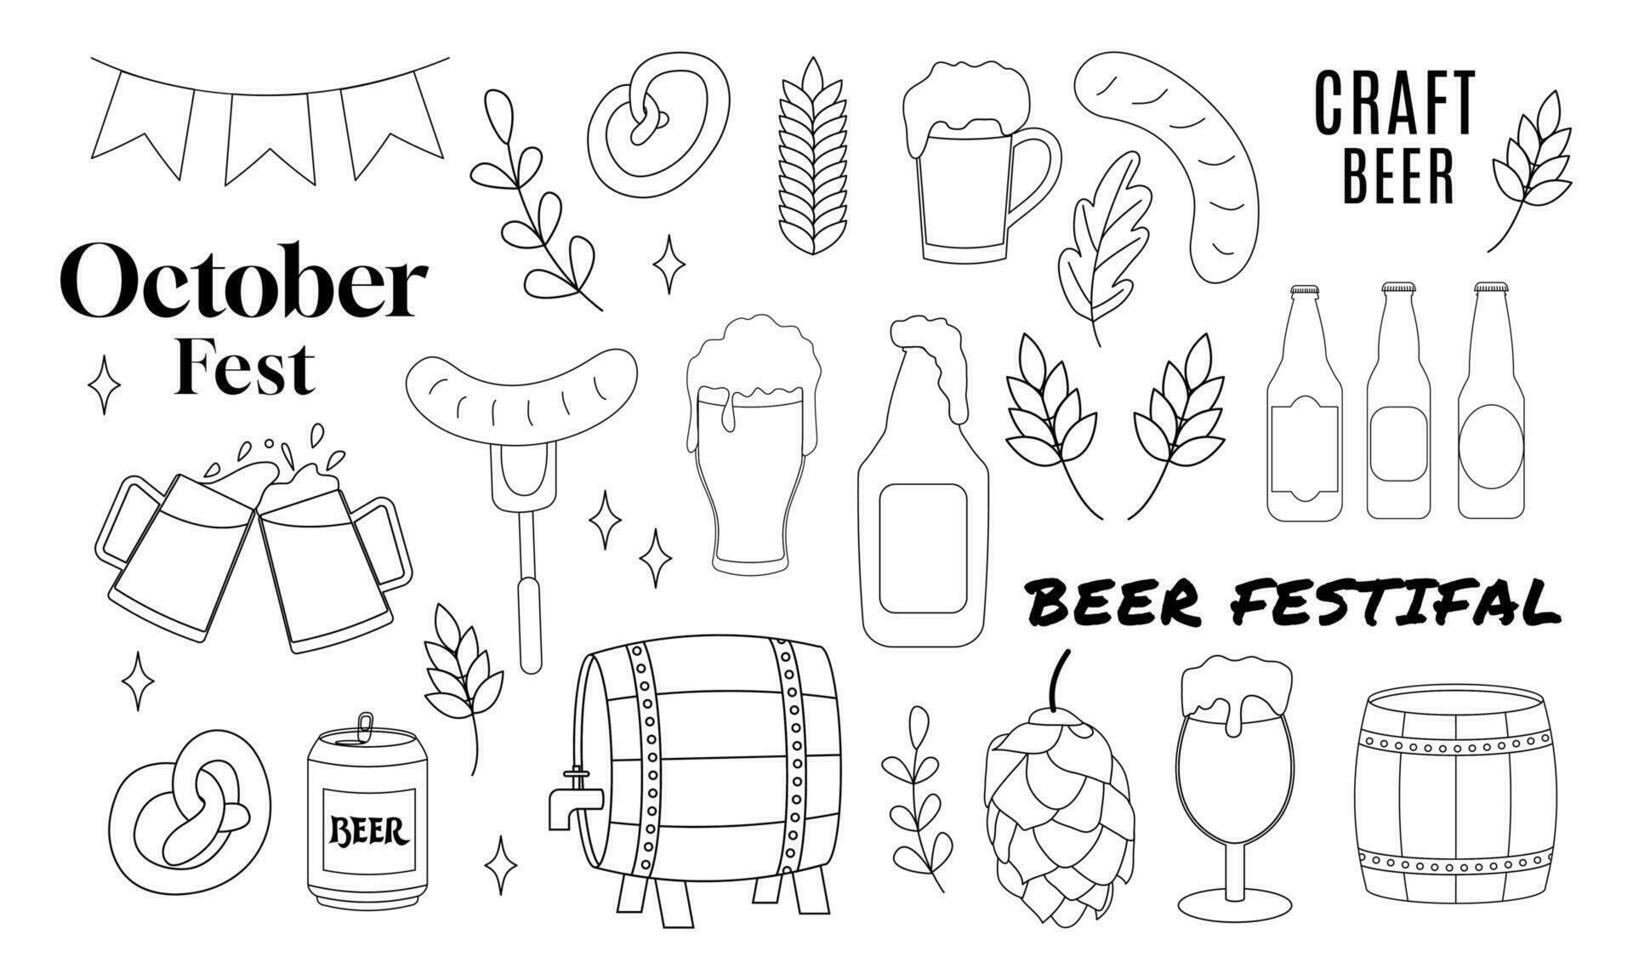 Beer Set hand-drawn Outline Doodles Vector Illustration with lettering